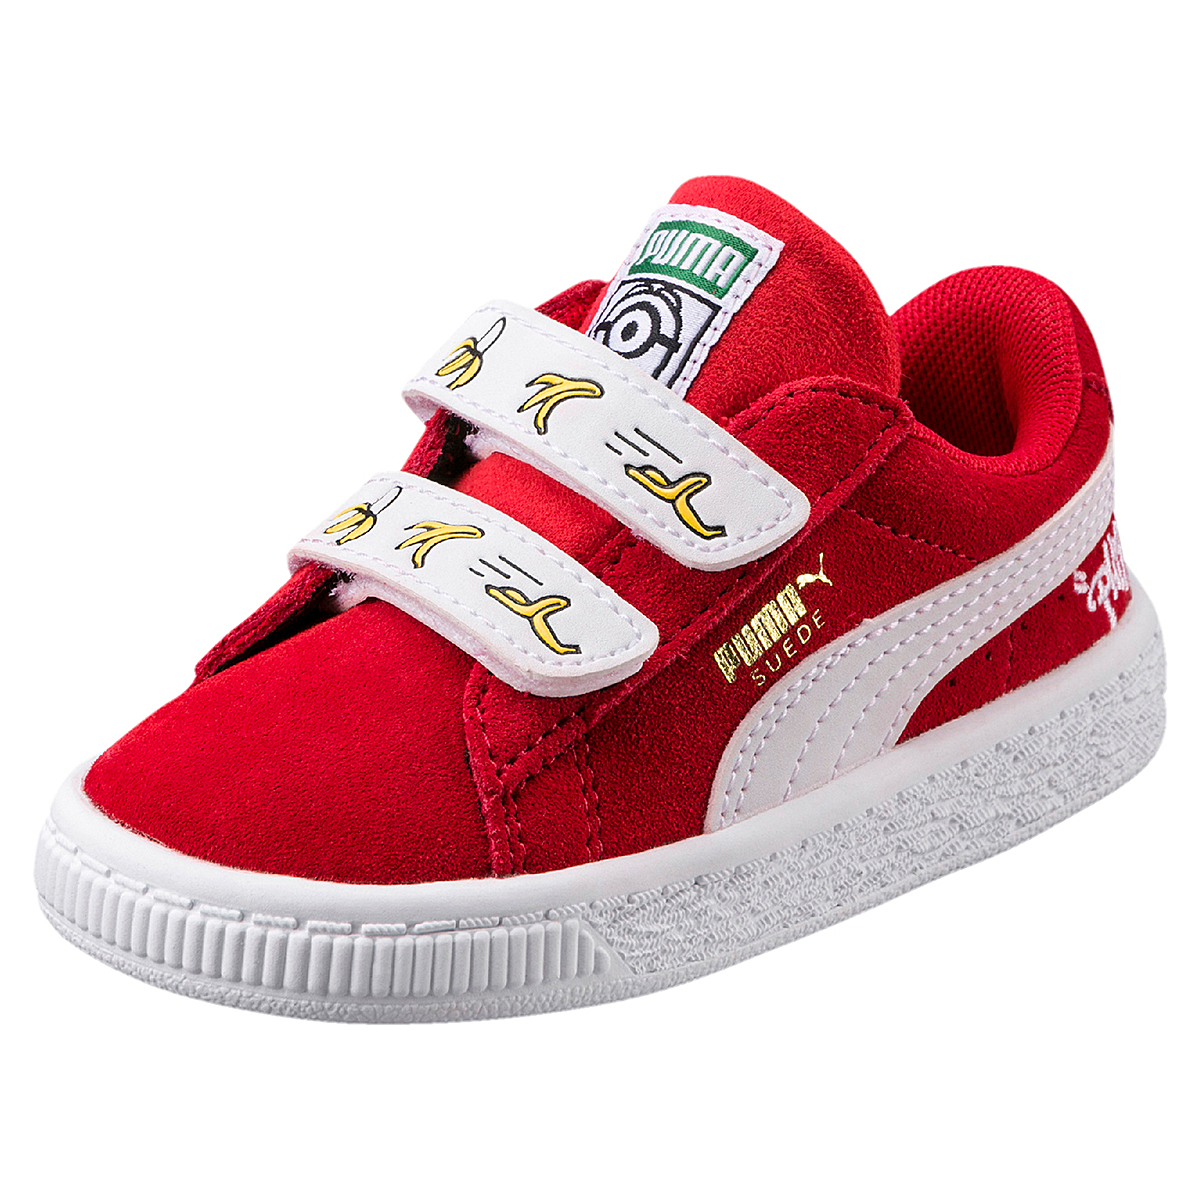 Puma Minions Suede V PS Kinder Sneaker Schuhe 365528 01 rot